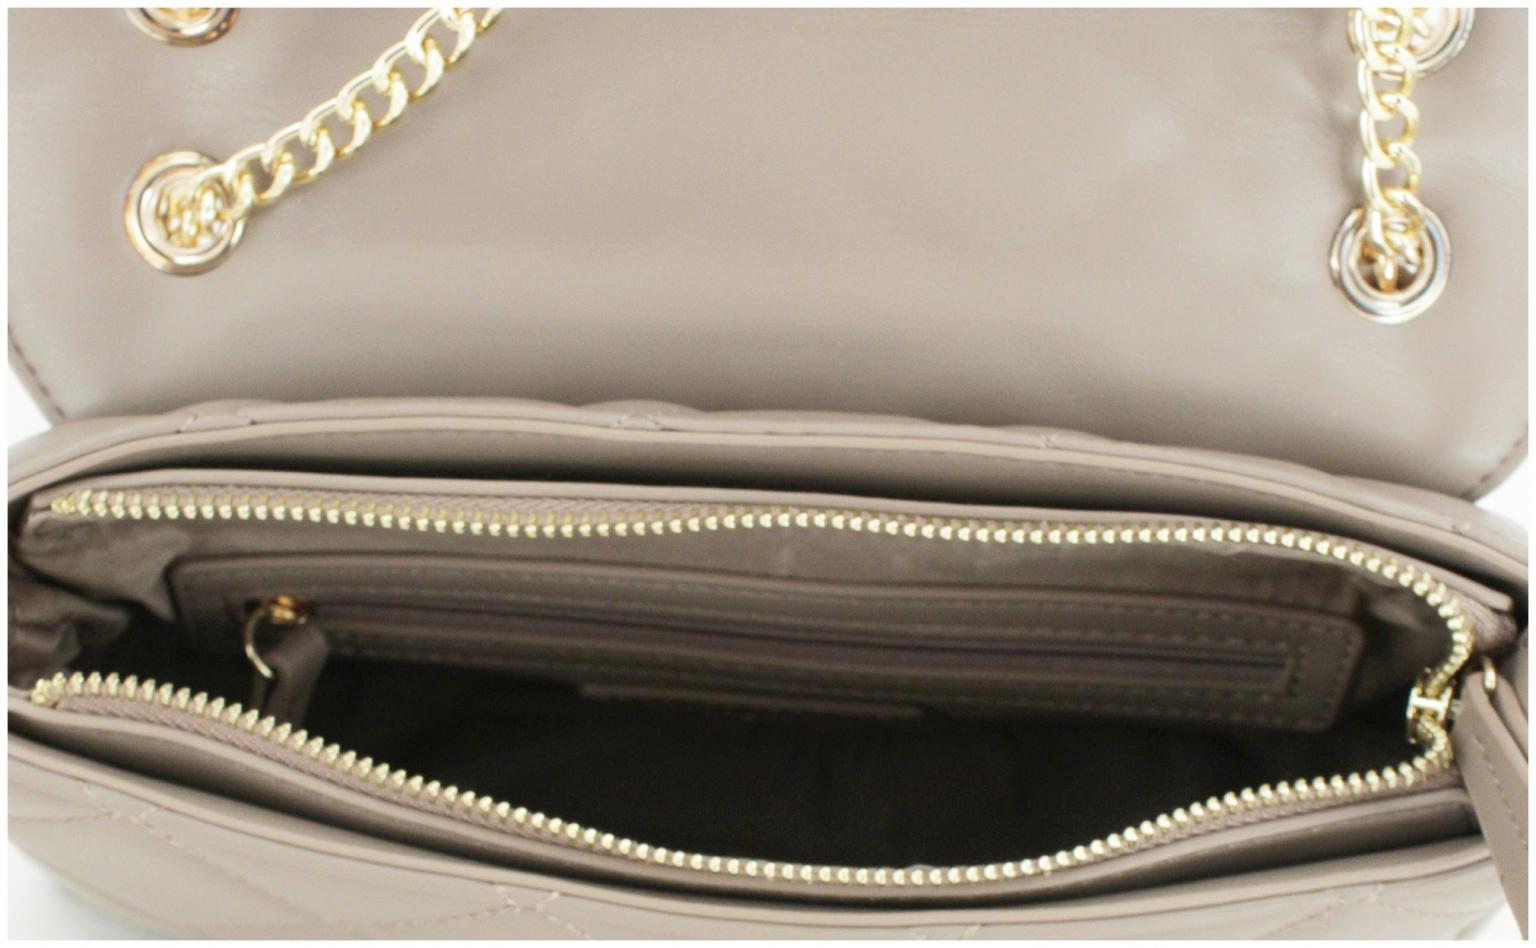 Valentino Ocarina Ecru Shoulder Bag gesteppt hellbeige Metallkette